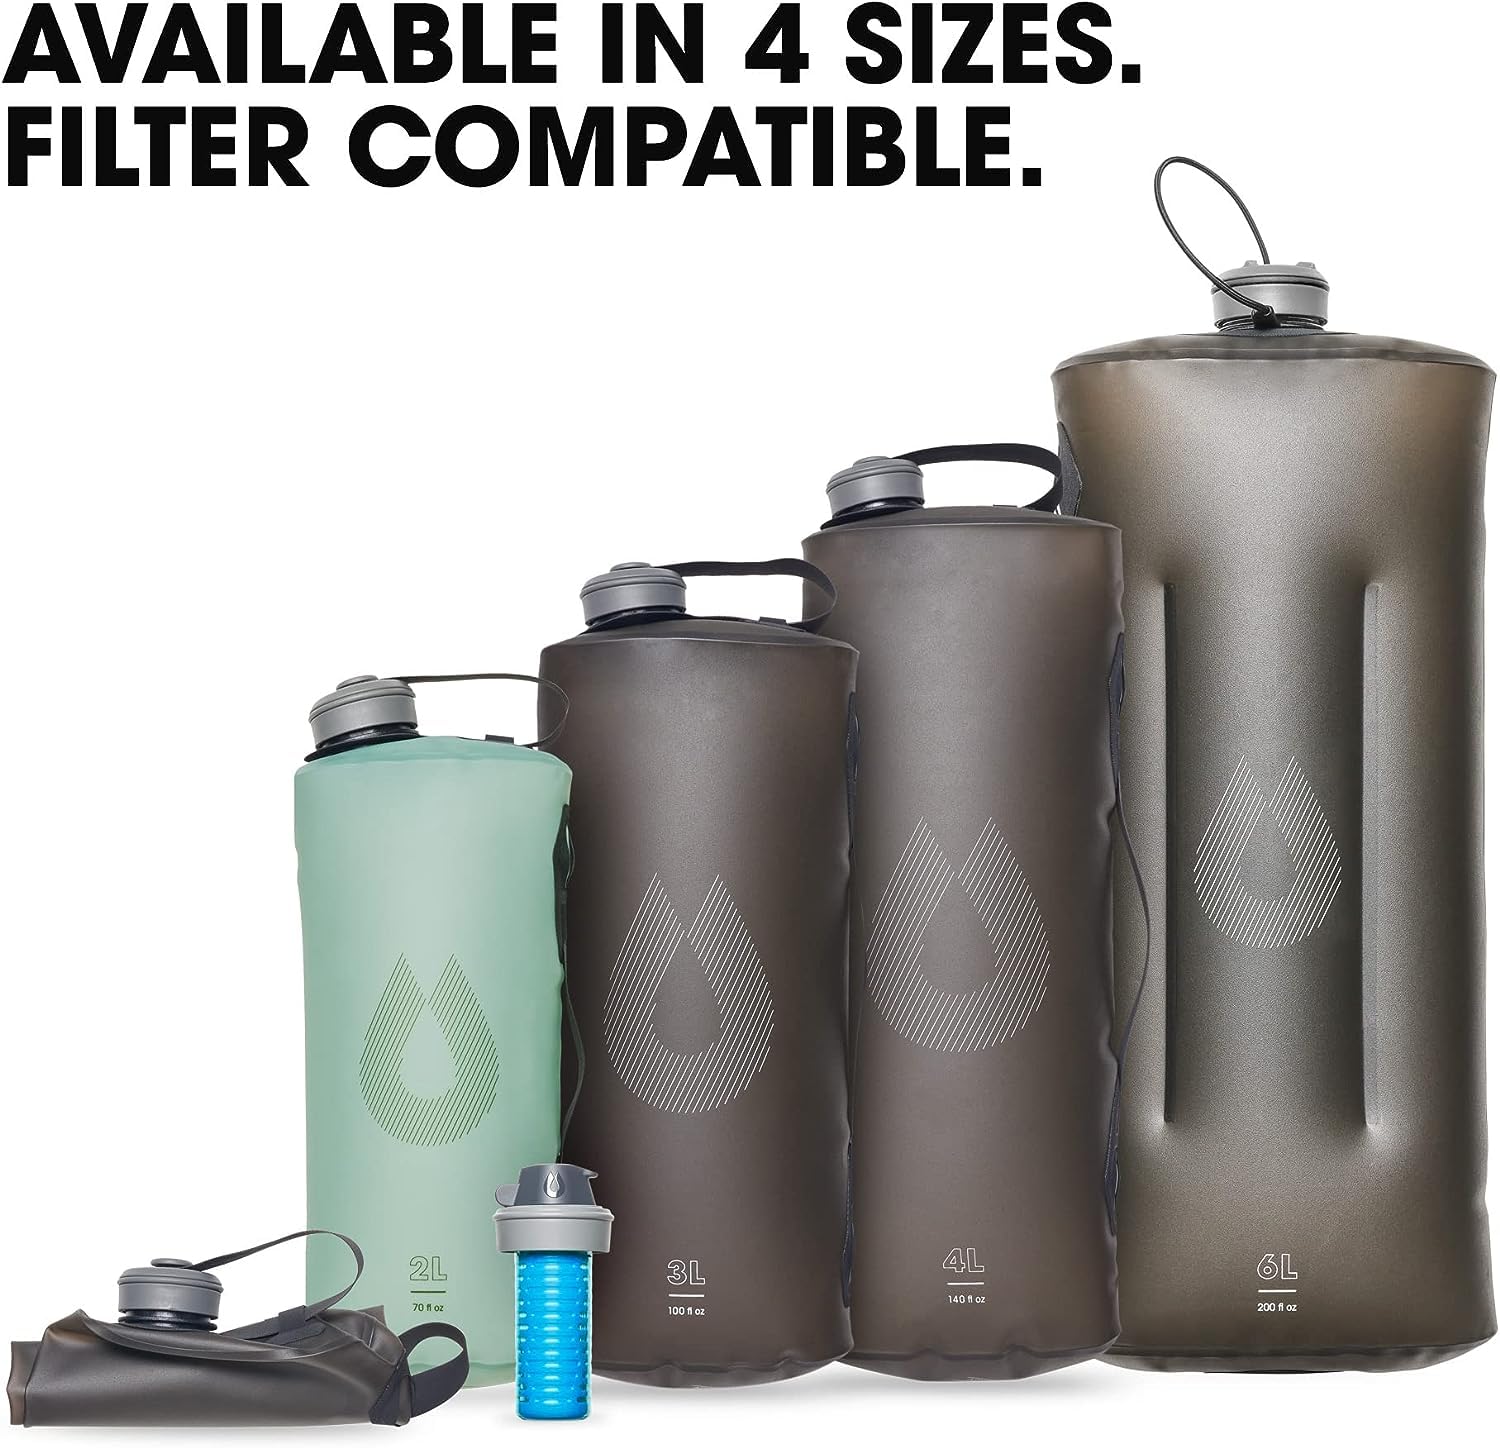 HydraPak Seeker - Collapsible Water Storage (3L/100oz) - BPA & PVC Free Camping Hydration Reservoir Bag - Sutro Green